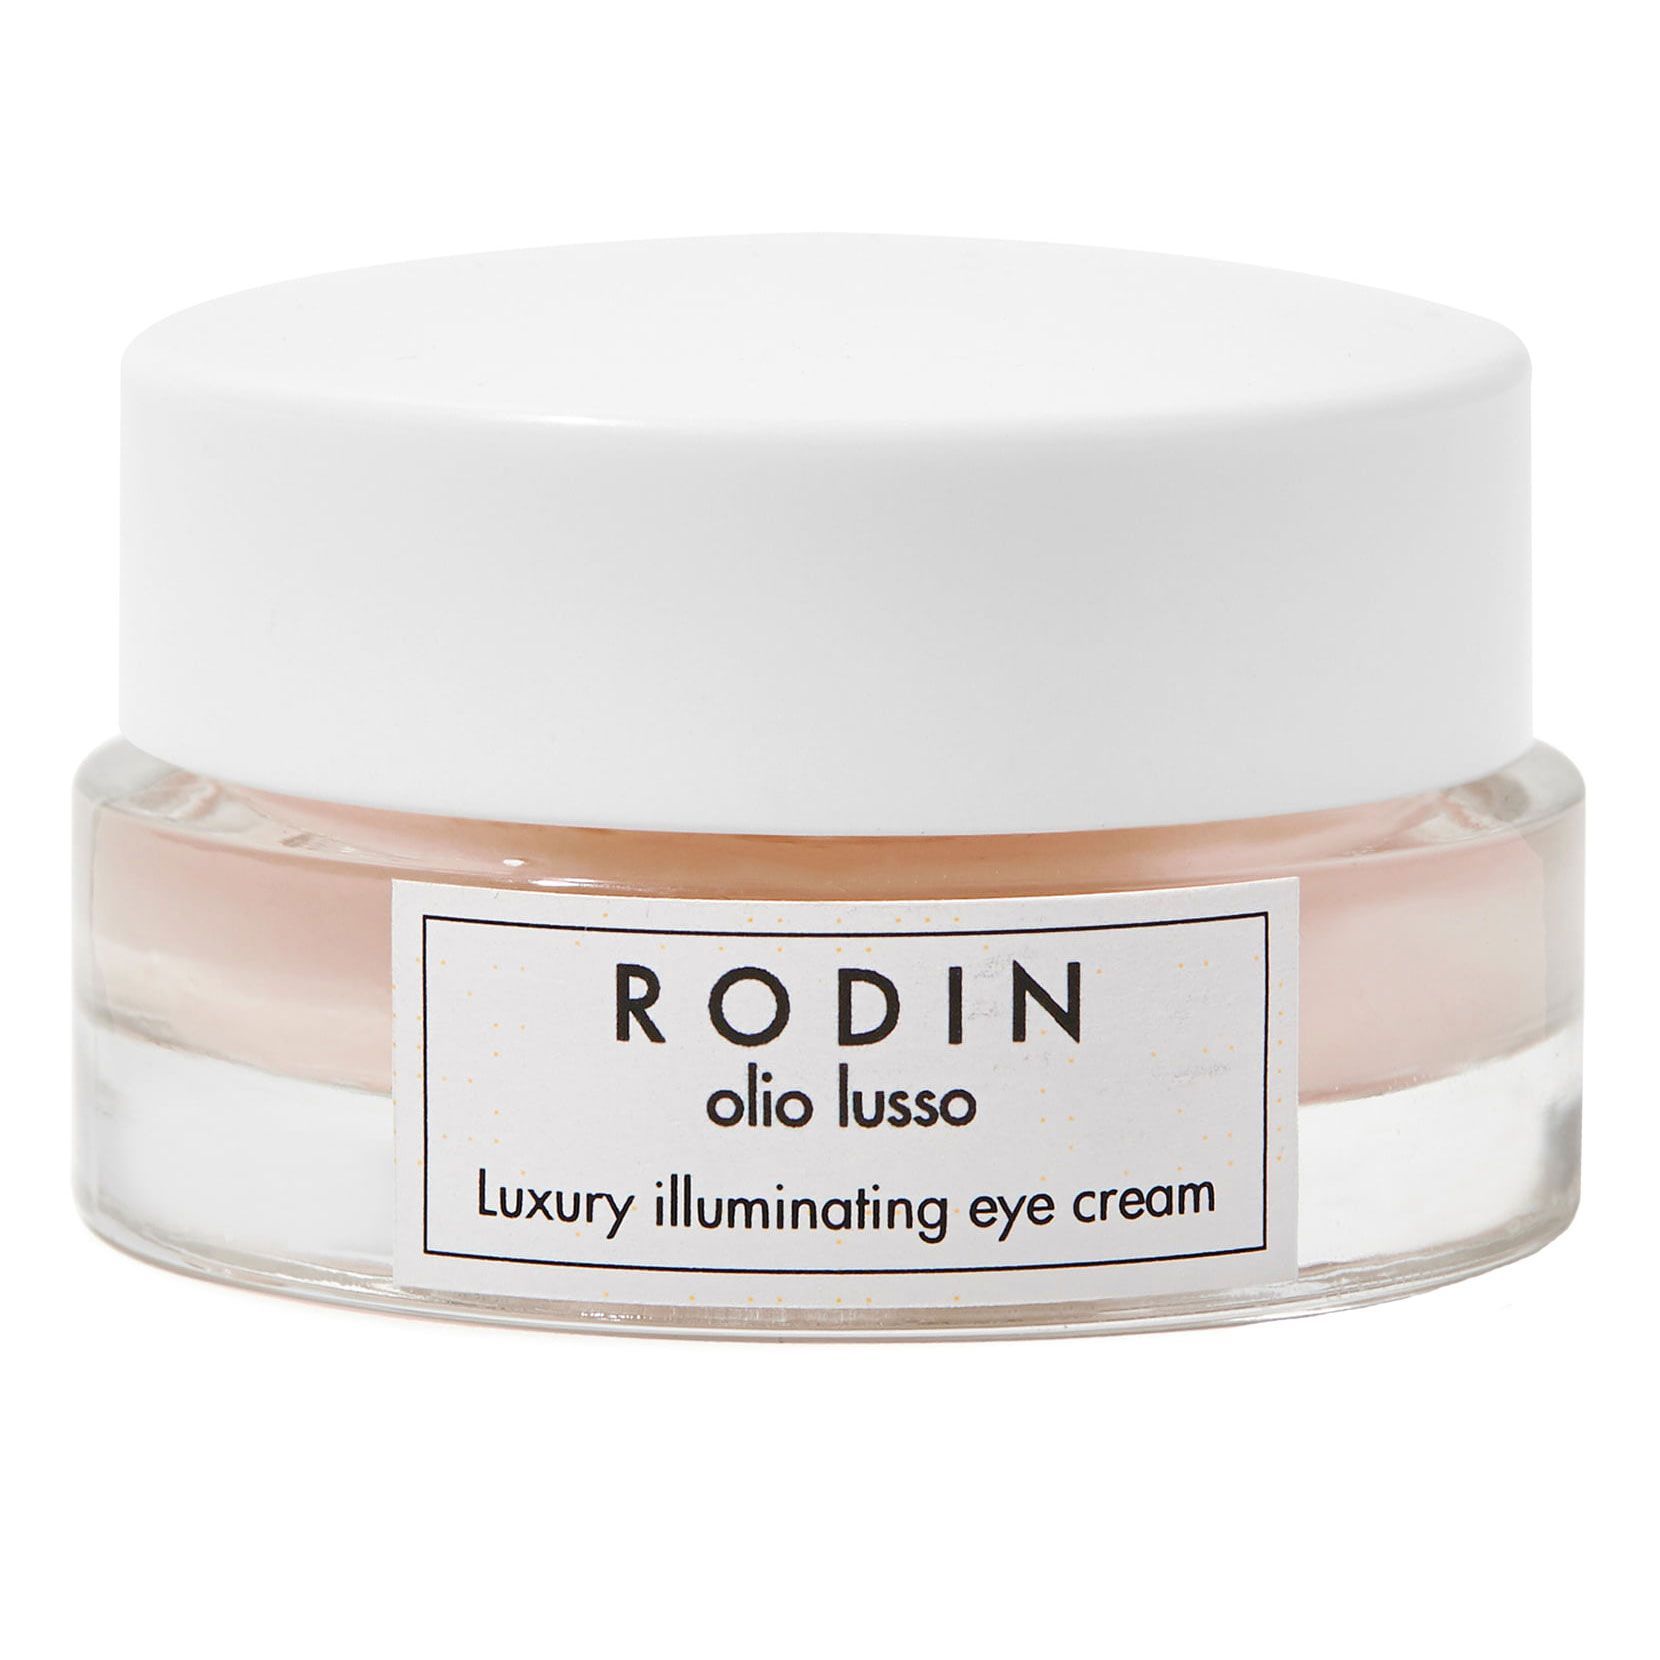 Rodin Olio Lusso Luxury Illuminating Eye Cream